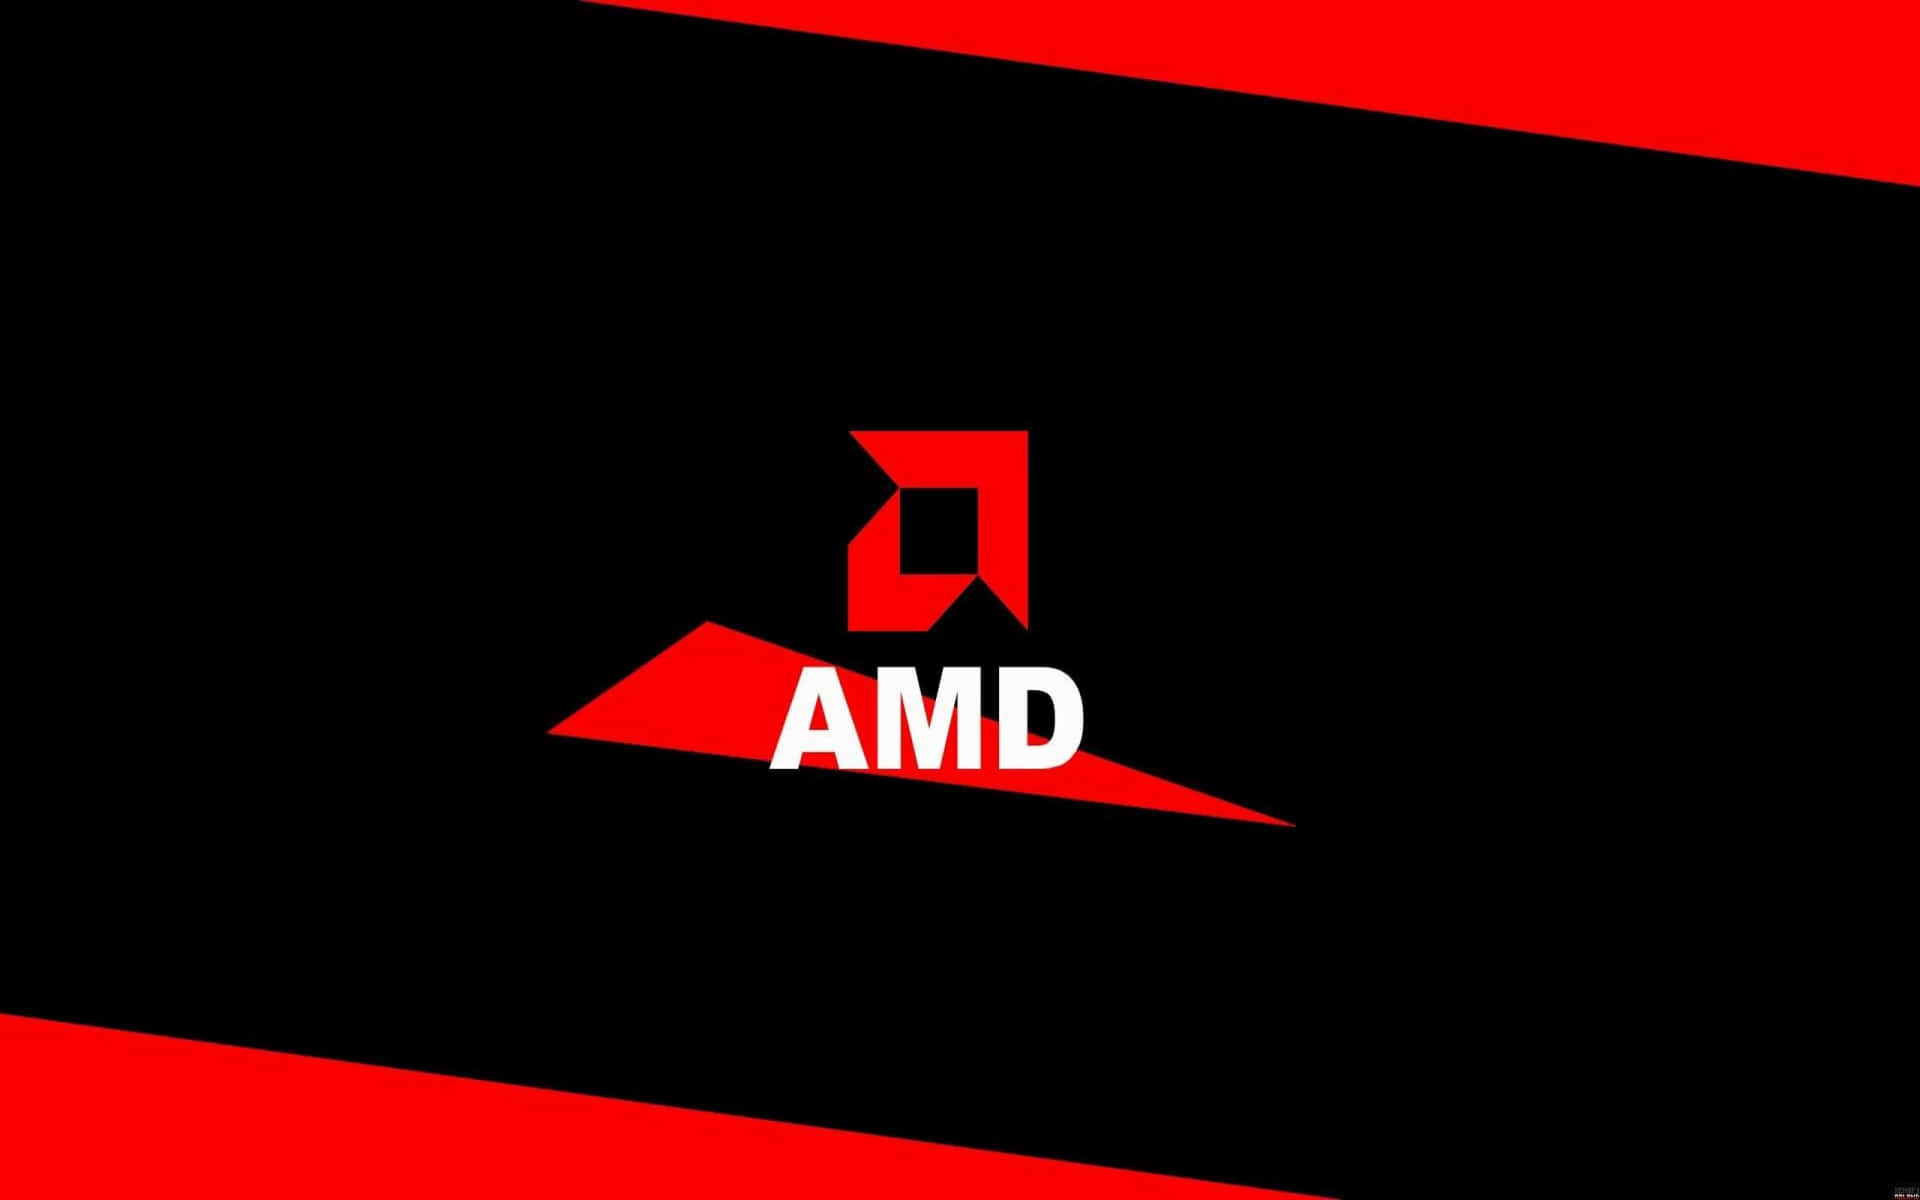 Amd Logo On A Black Background